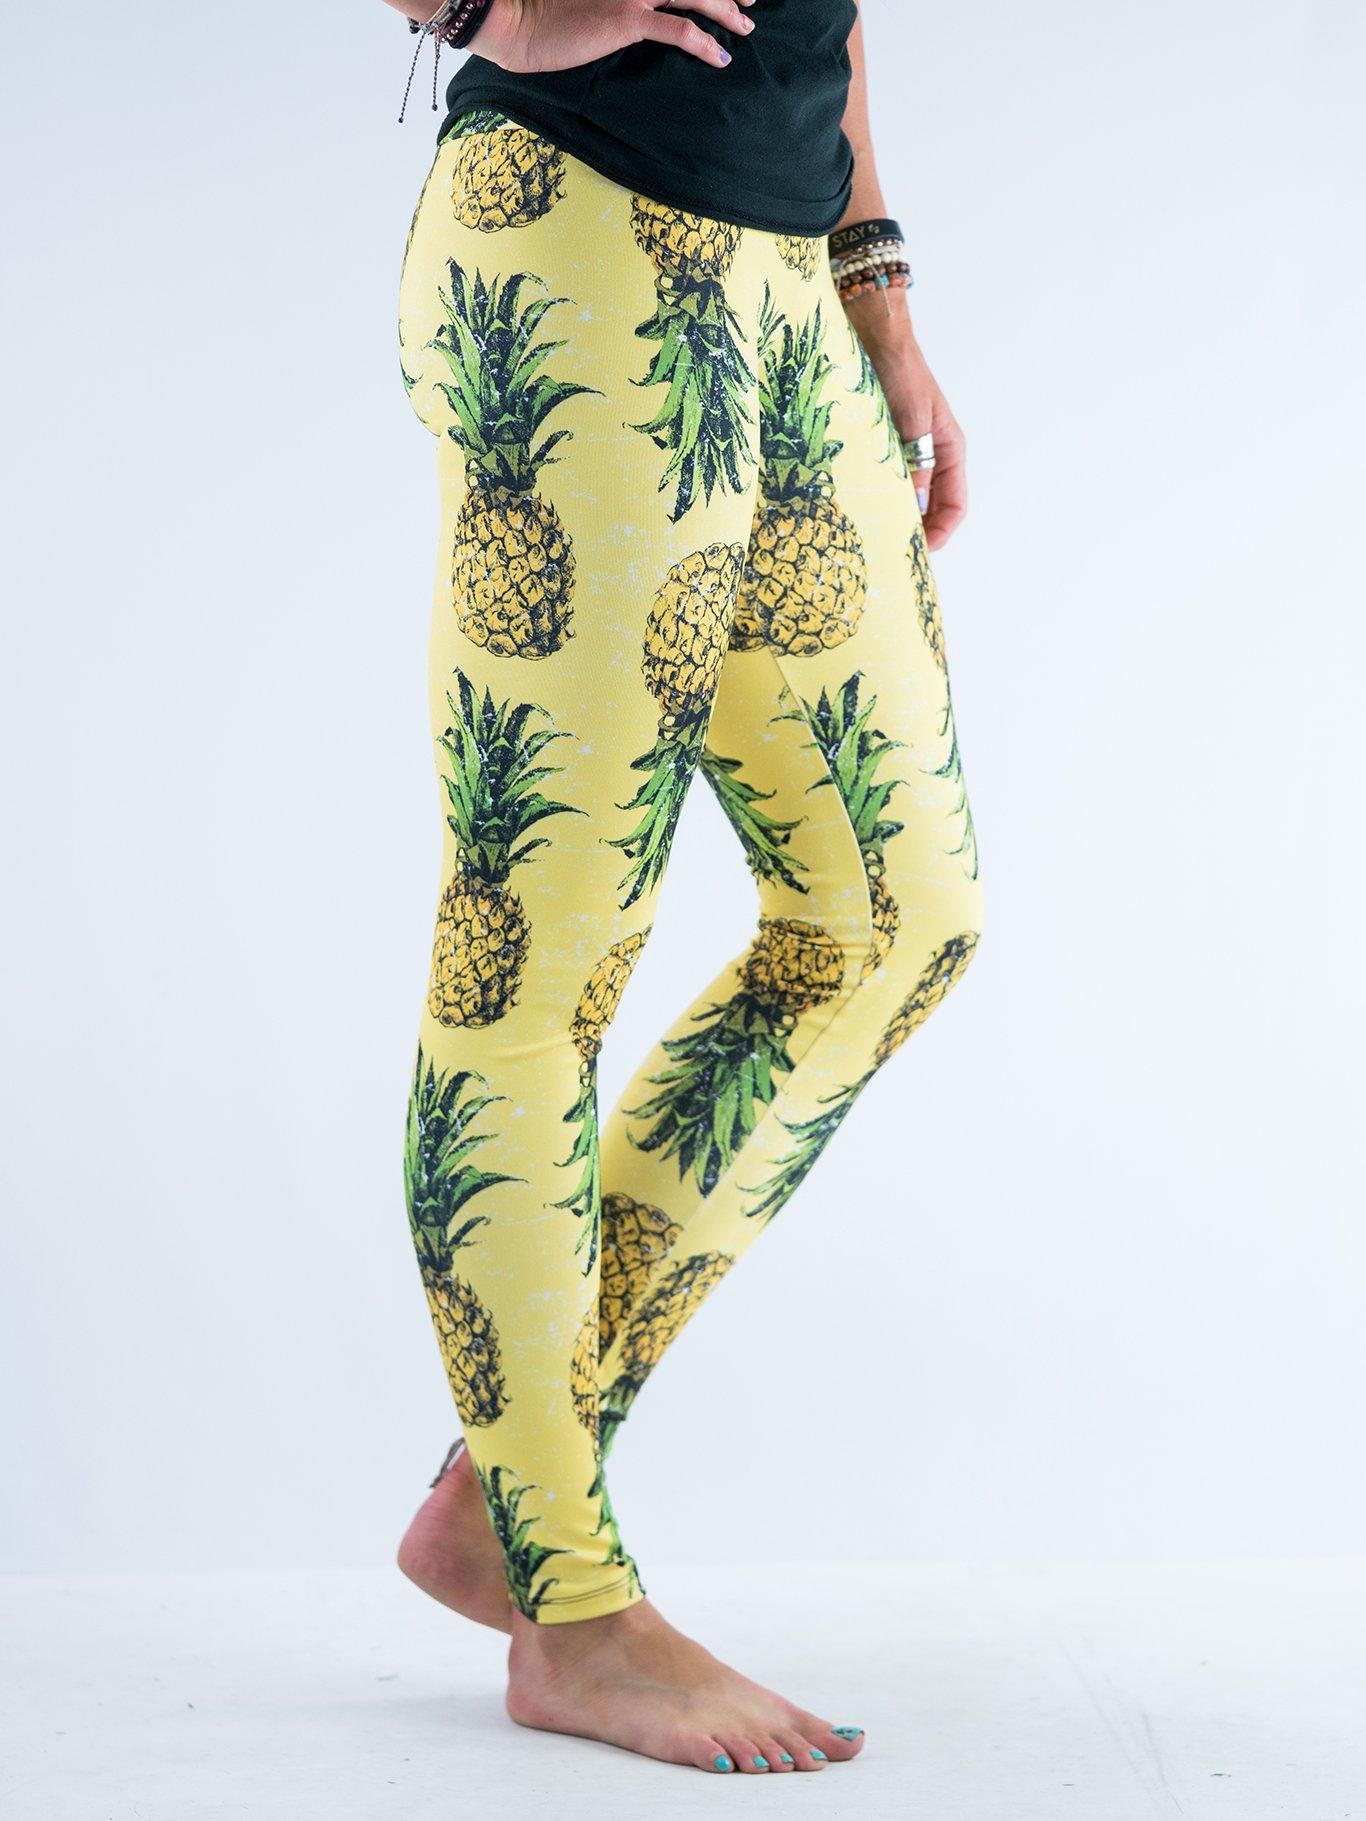 pineapple yoga pants